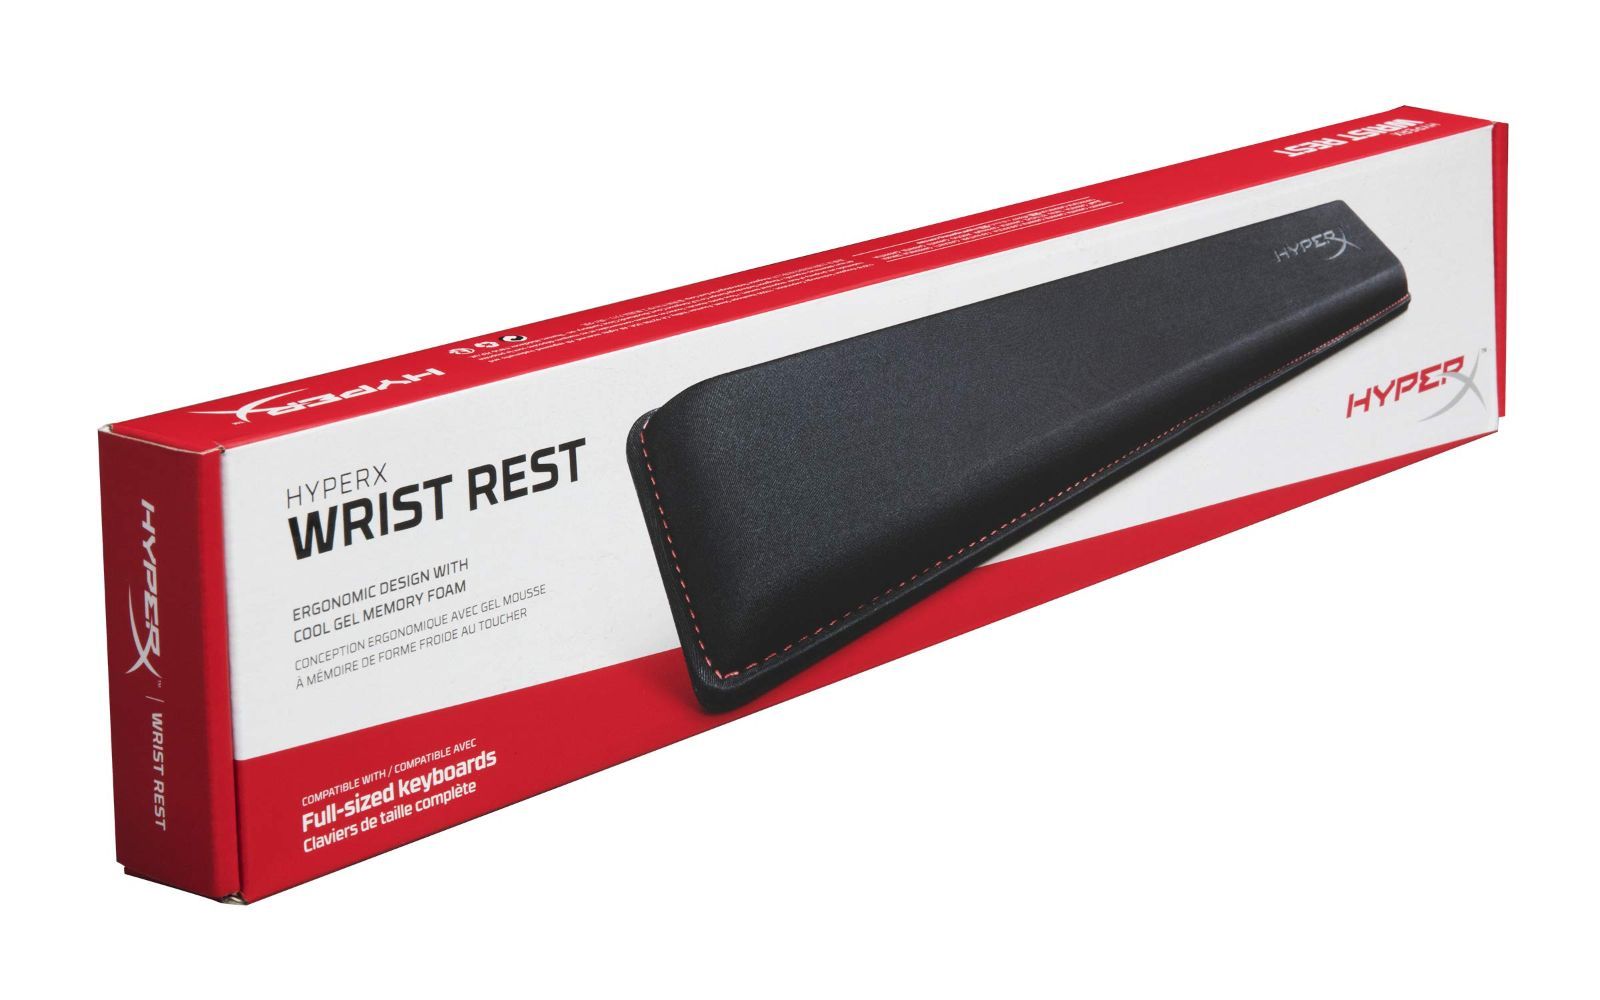 HyperX Wrist Rest リストレスト 疲労軽減 低反発クッション 人間工学デザイン 2年 HX-WR ( 4P5M9AA )